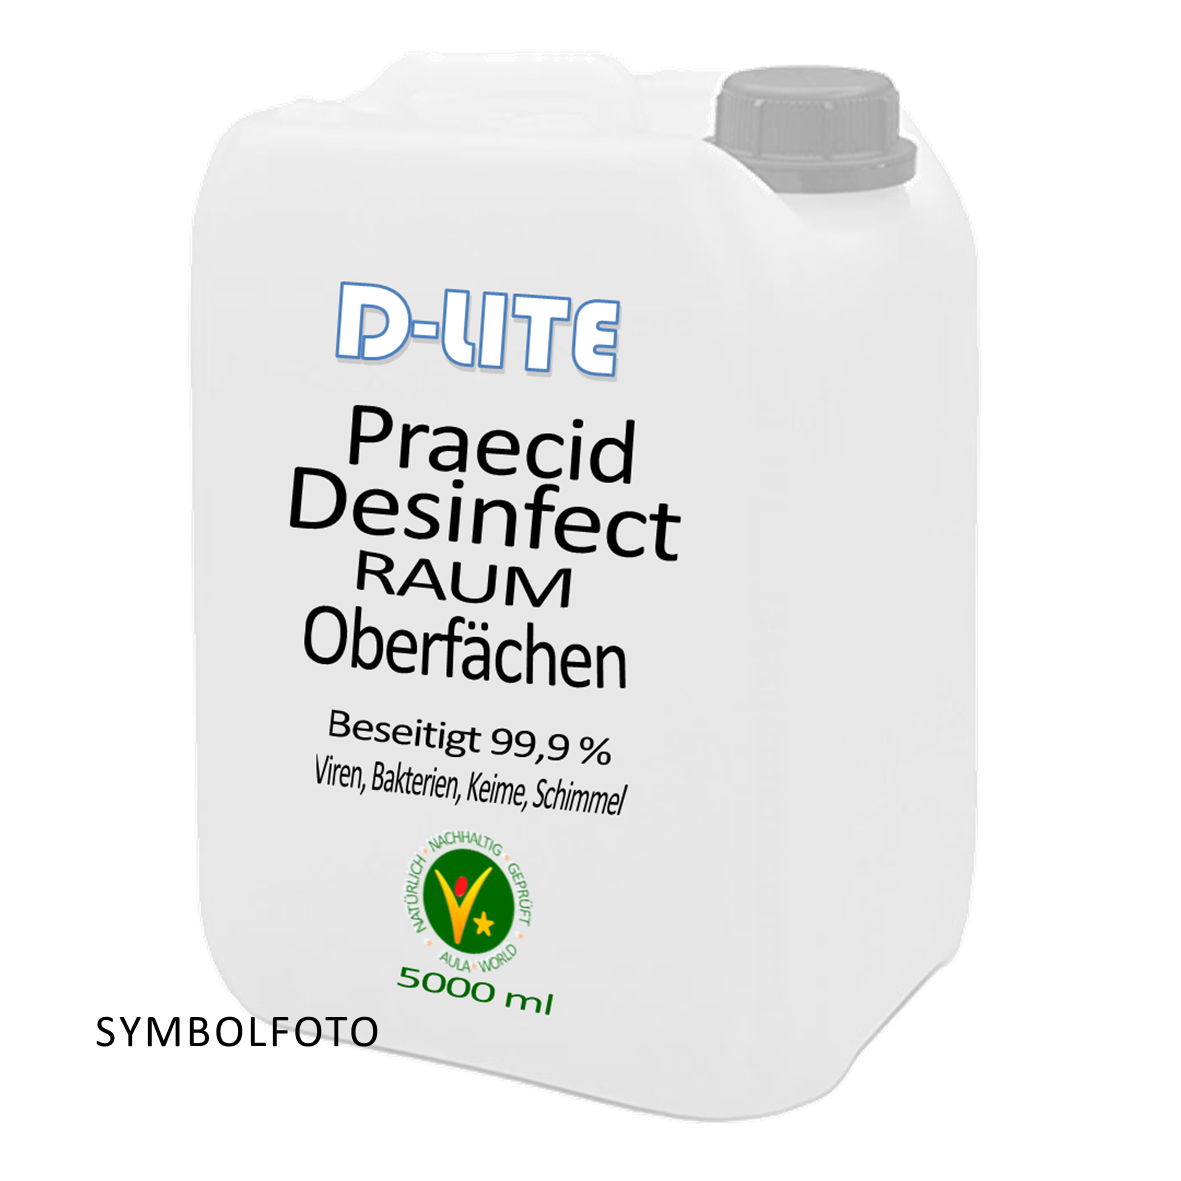 D-LITE  Praecid Raum Desinfect & Silver-Ions  5000 ml